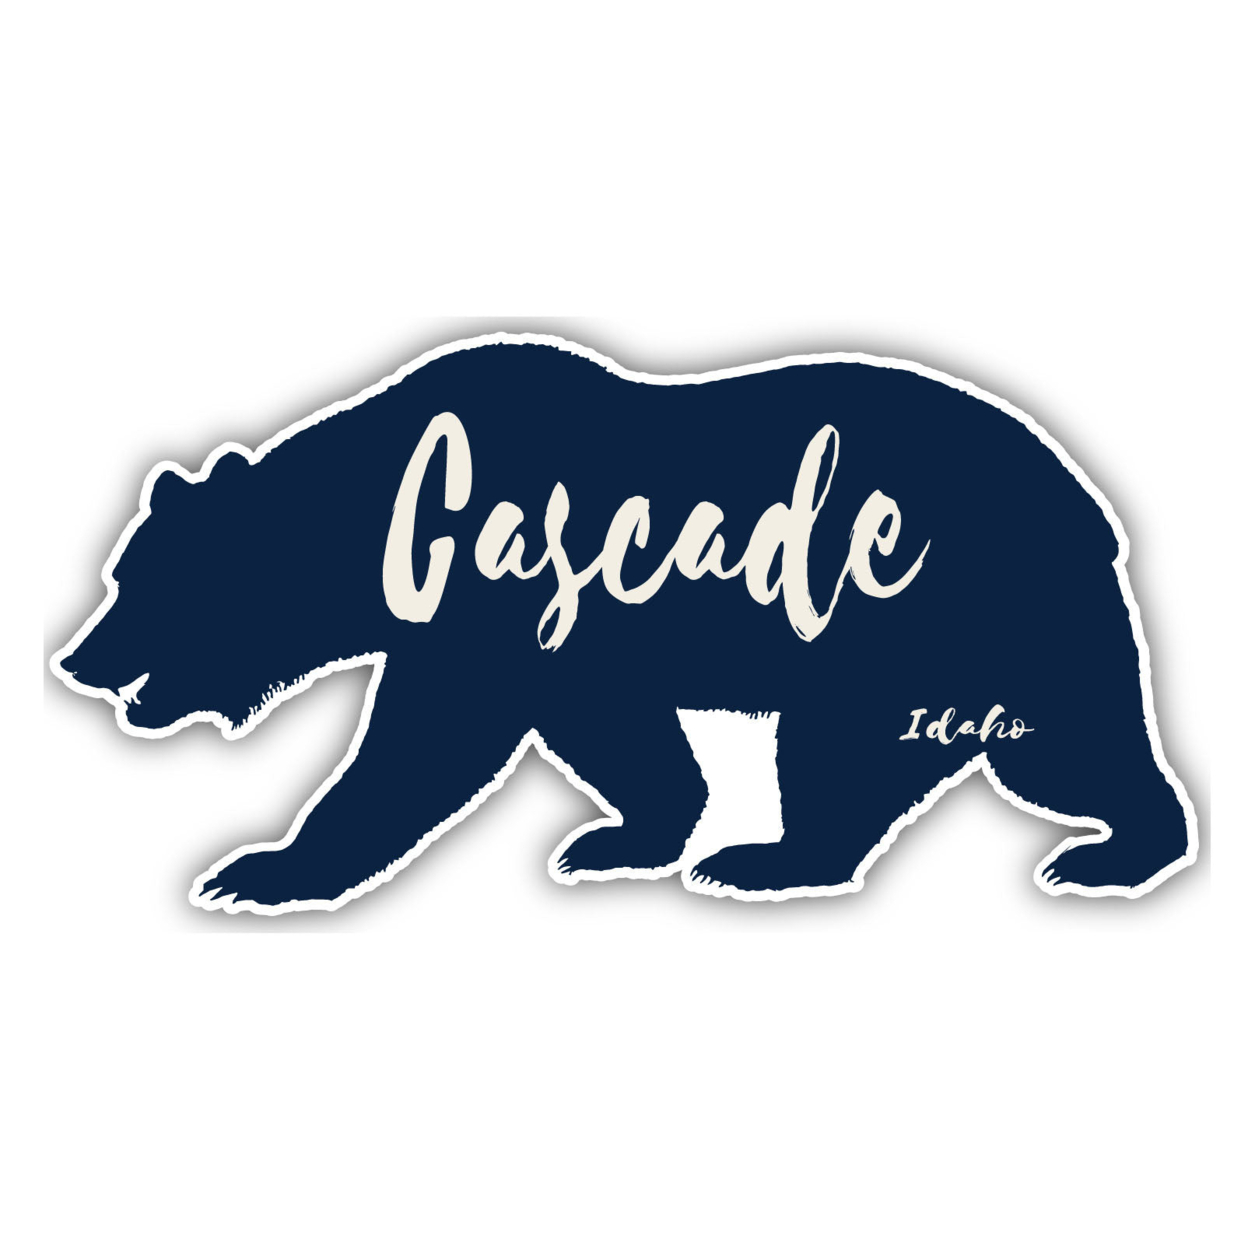 Cascade Idaho Souvenir Decorative Stickers (Choose Theme And Size) - Single Unit, 4-Inch, Bear